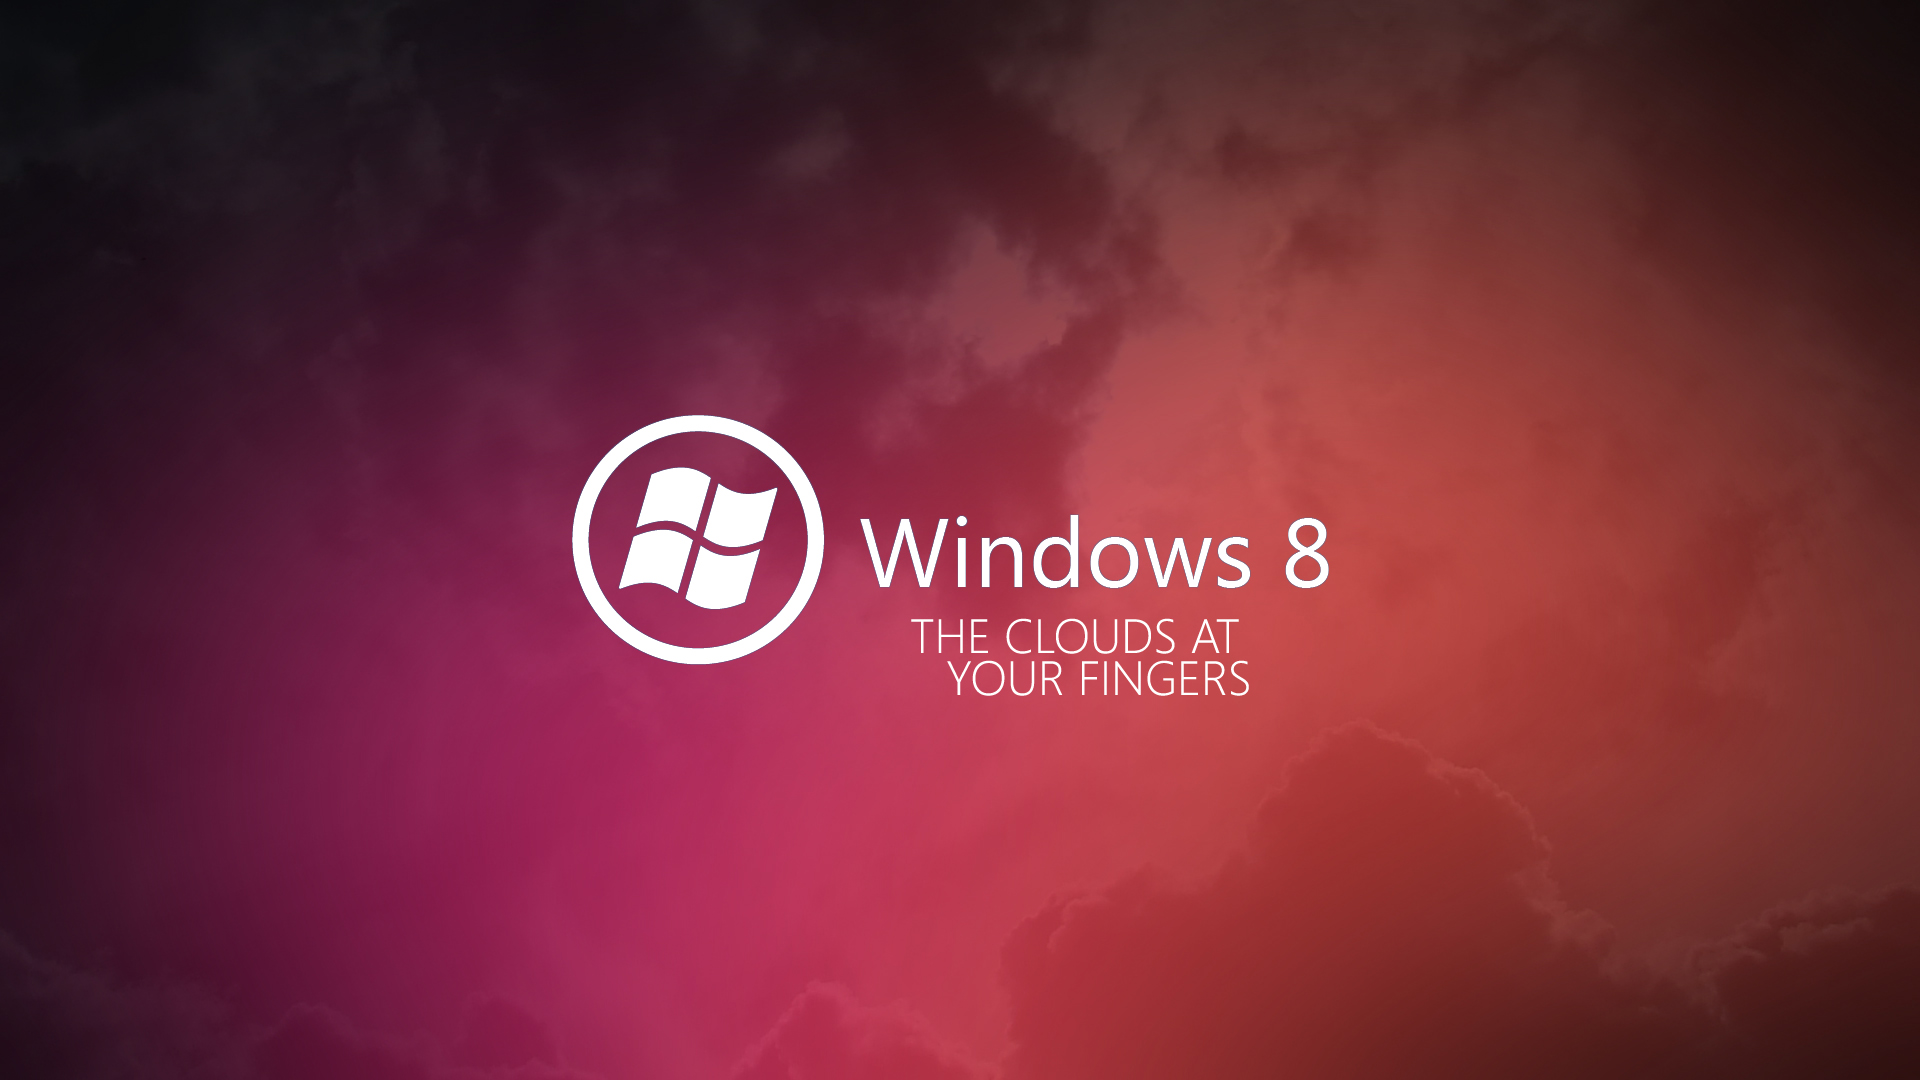 windows 8 wallpaper hd 1080p free download #21